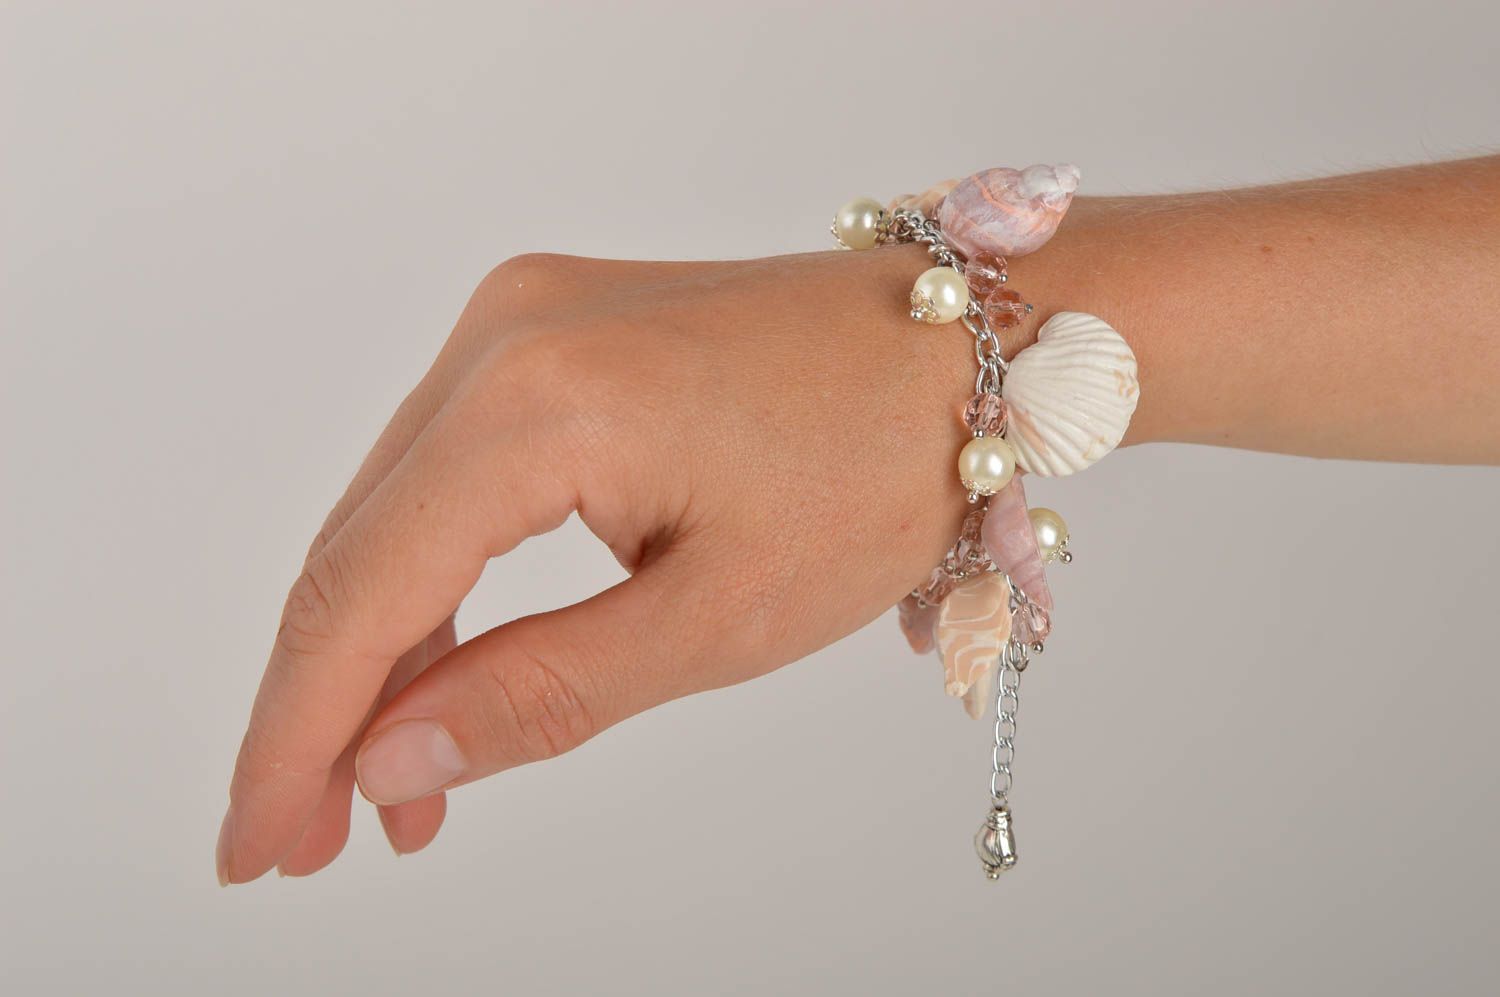 Handmade stylish bracelet jewelry with charms designer elegant jewelry photo 3